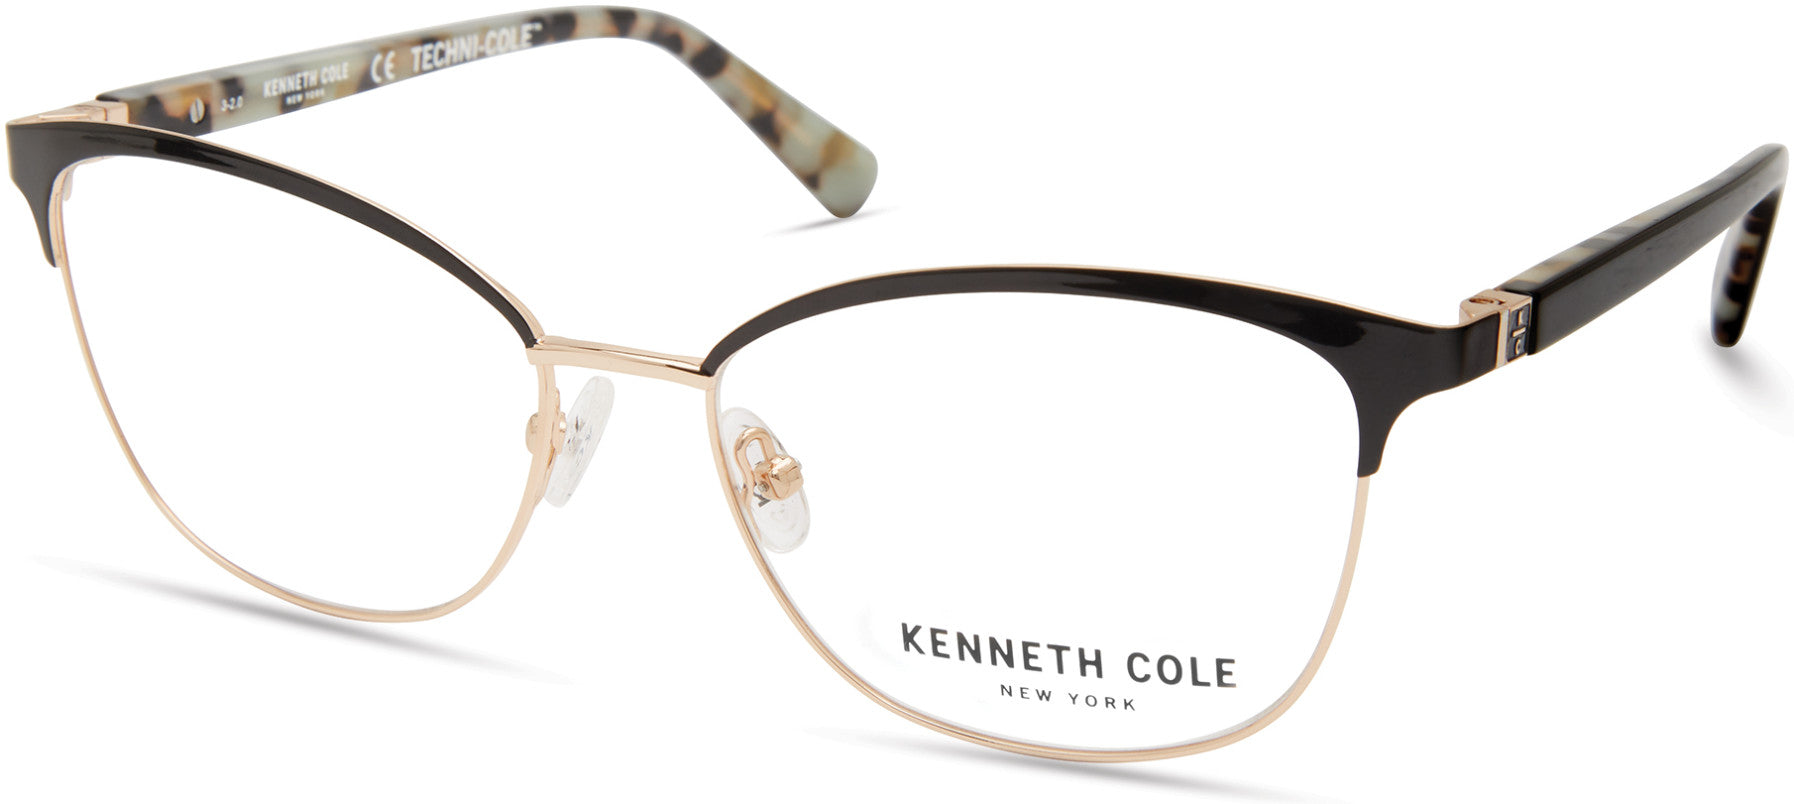 Kenneth Cole New York,Kenneth Cole Reaction KC0329 Square Eyeglasses 001-001 - Shiny Black